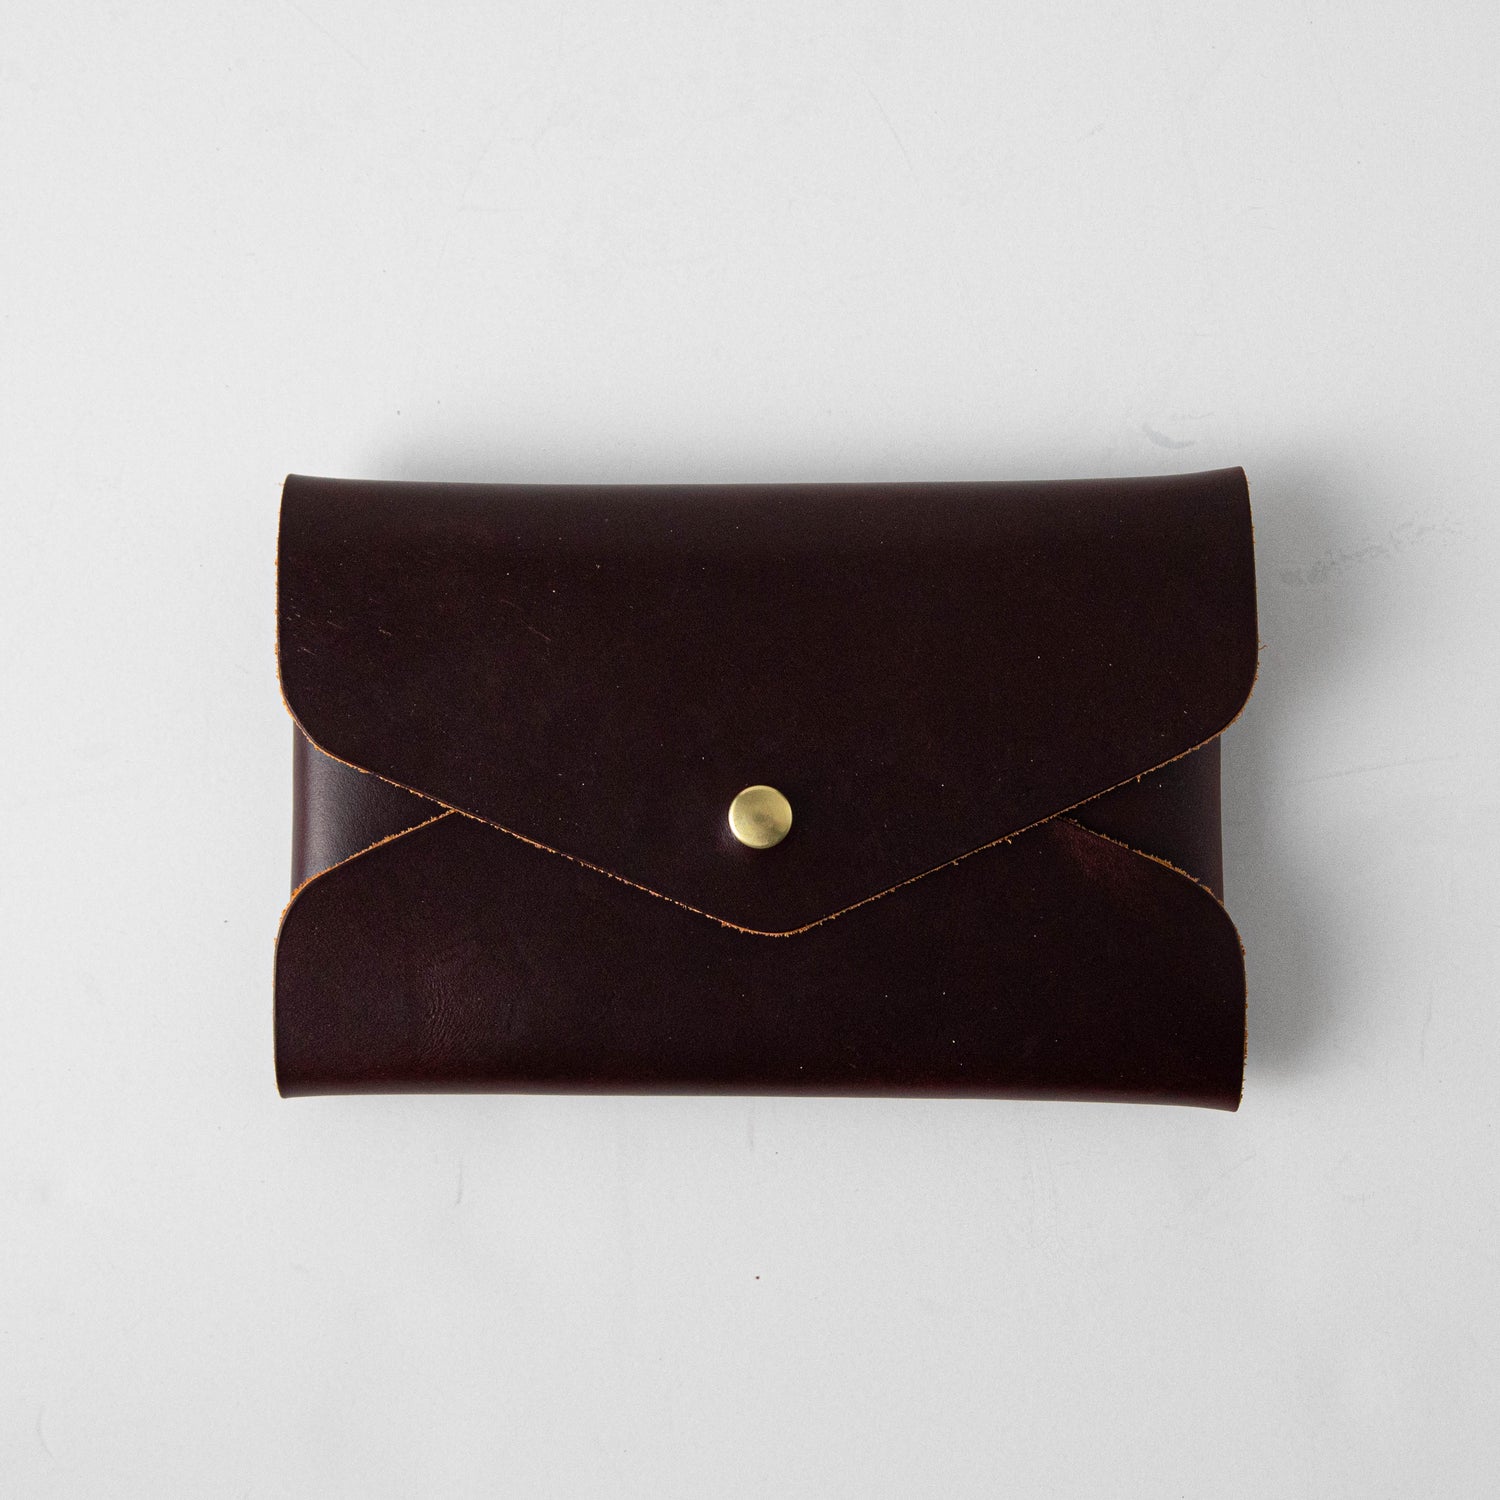 Oxblood Clutch, Envelope Clutch Bag with Silver Tone Chain Strap, Maroon Leather Purse, Slim Clutch Wallet, Evening Clutch, Clutch Handbag